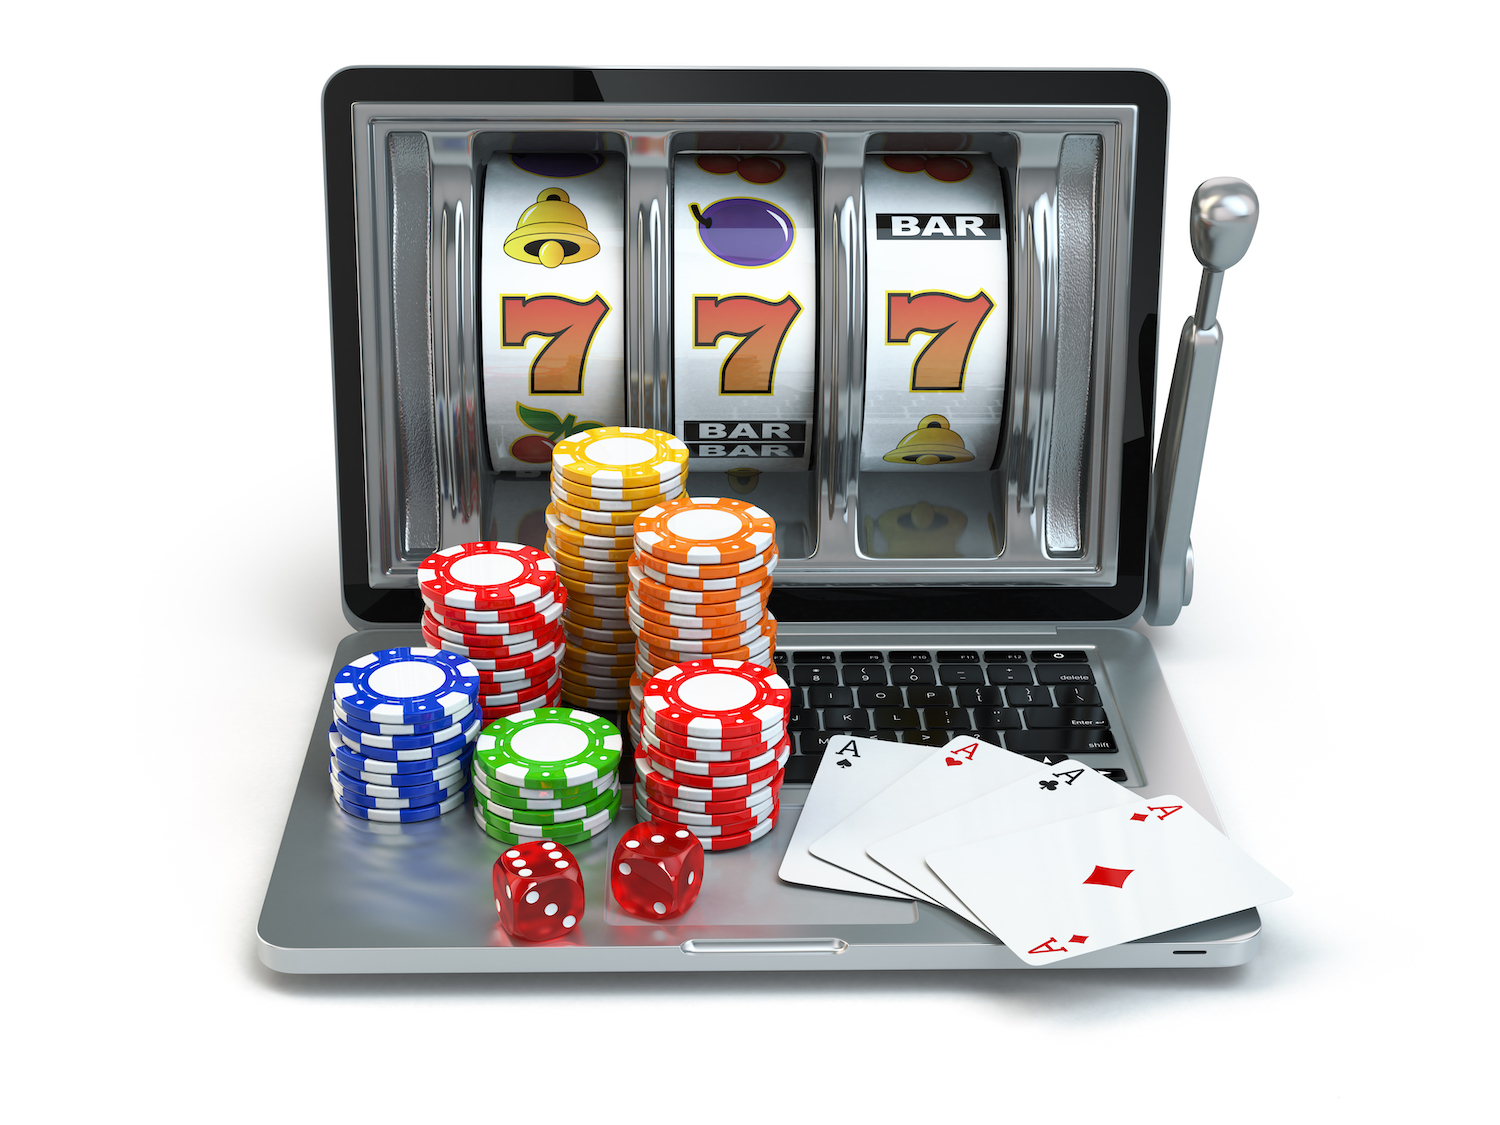 Anmeldebonus Online Casino